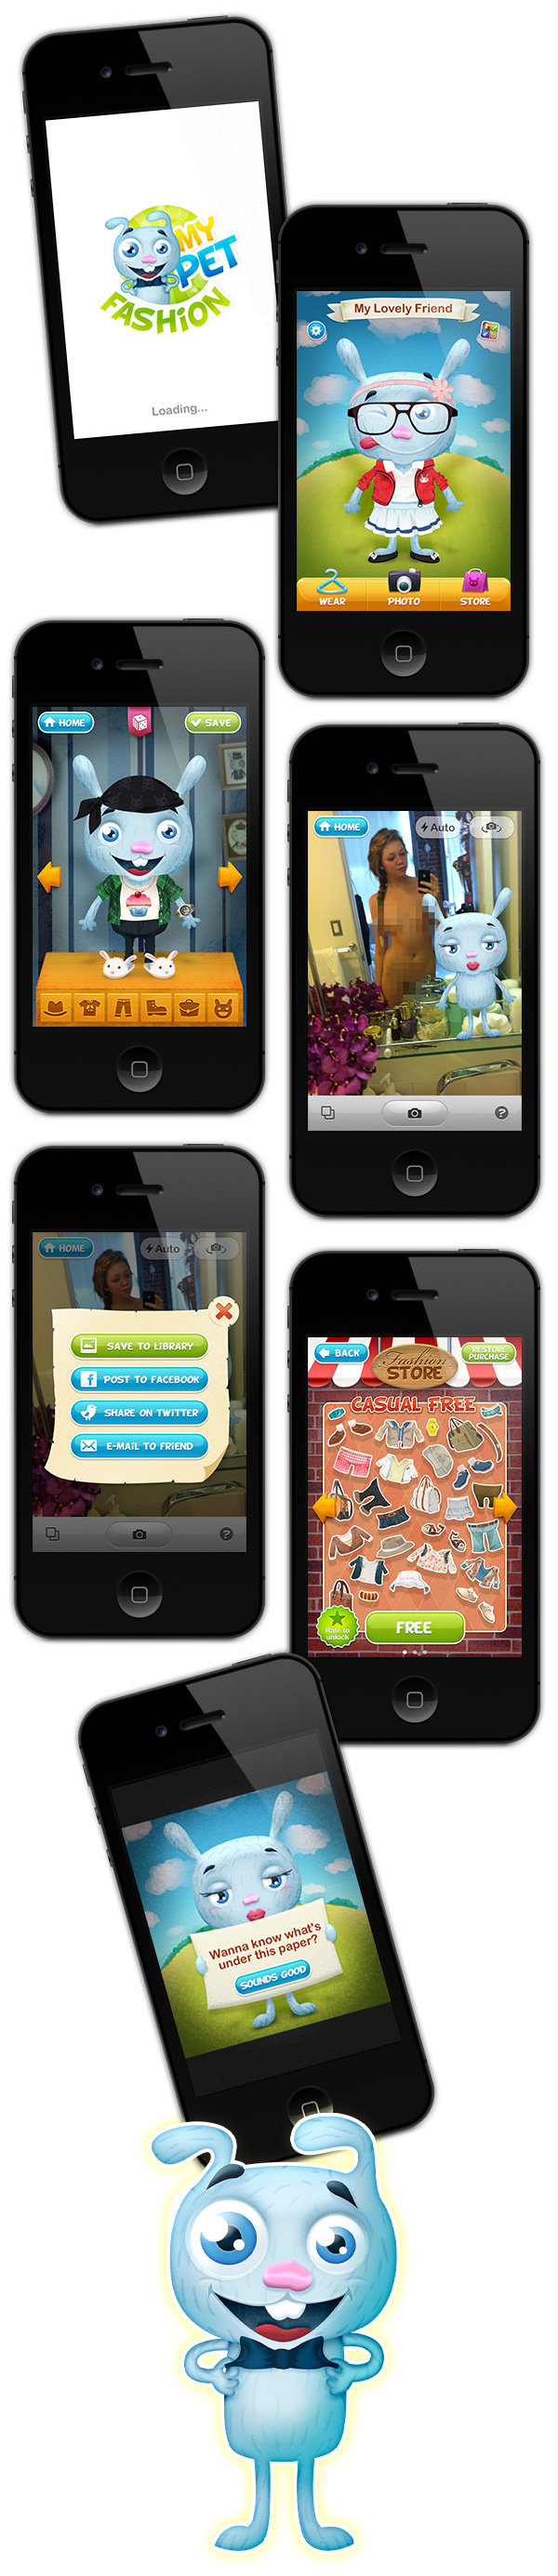 pet fashion Dress up iphone icon iphone iPhone Game iphone app app design app game rabbit bunny Children App  kids app